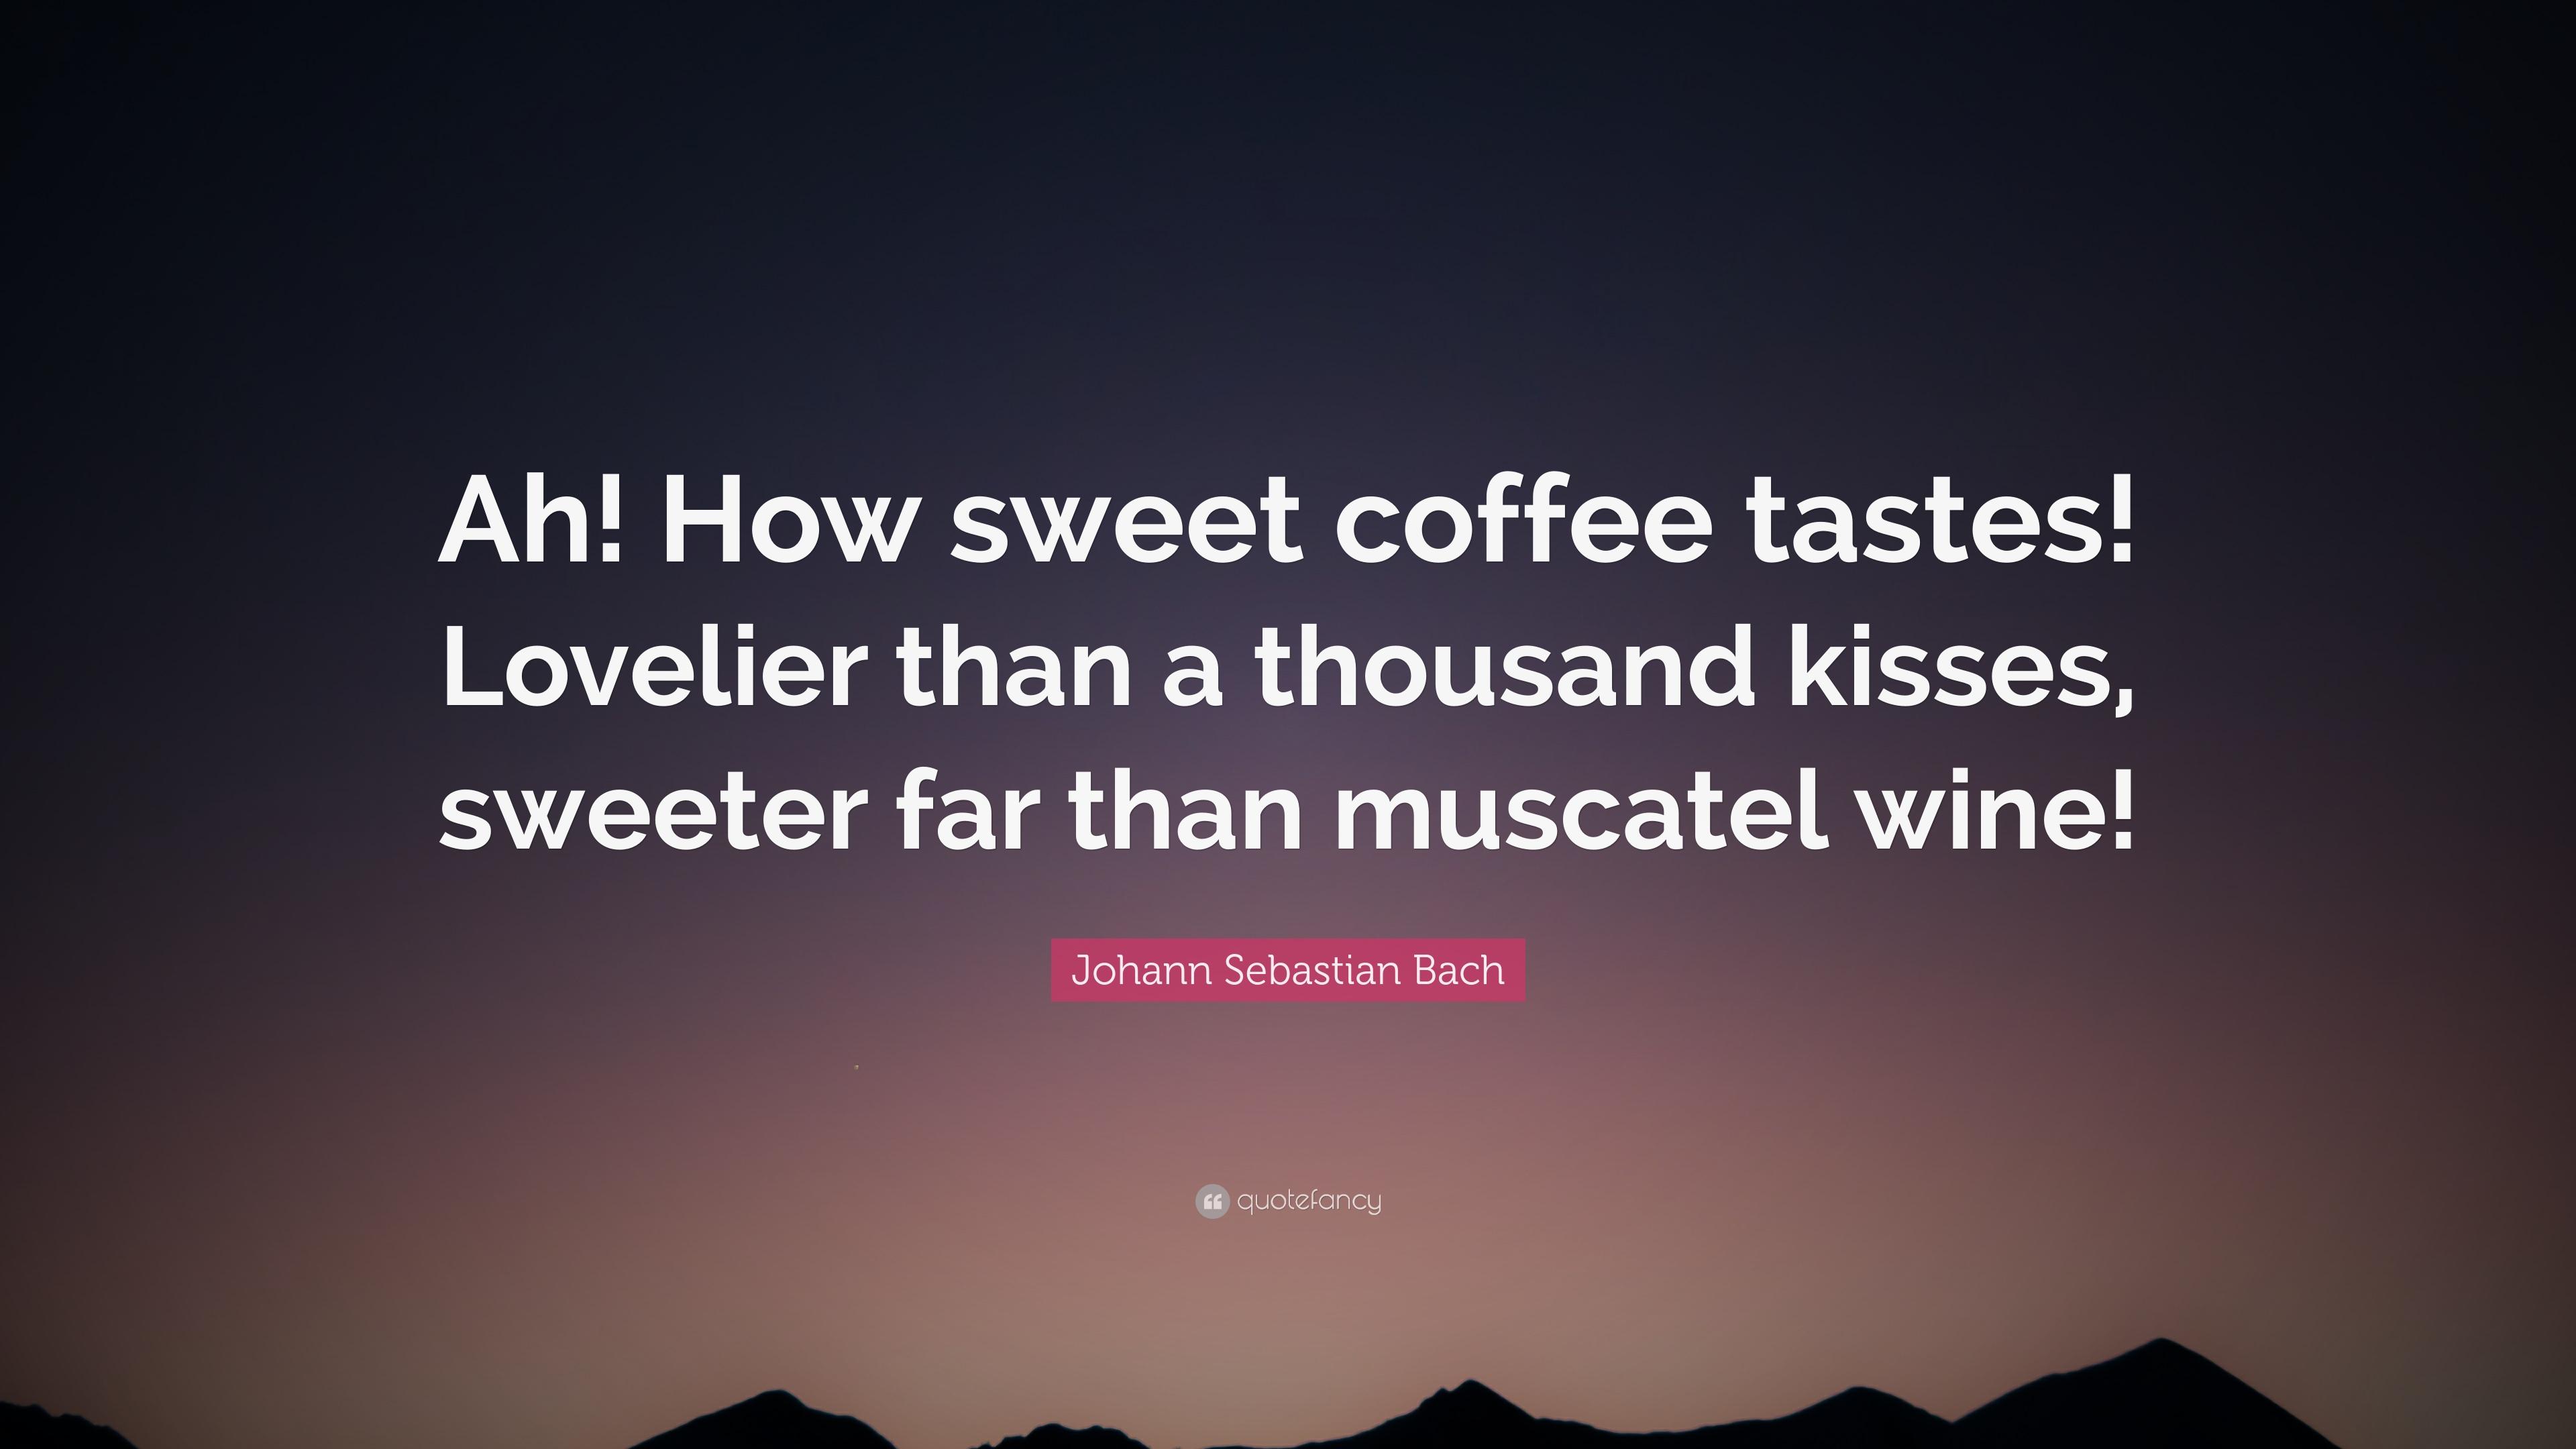 Johann Sebastian Bach Quote: “Ah! How sweet coffee tastes! Lovelier